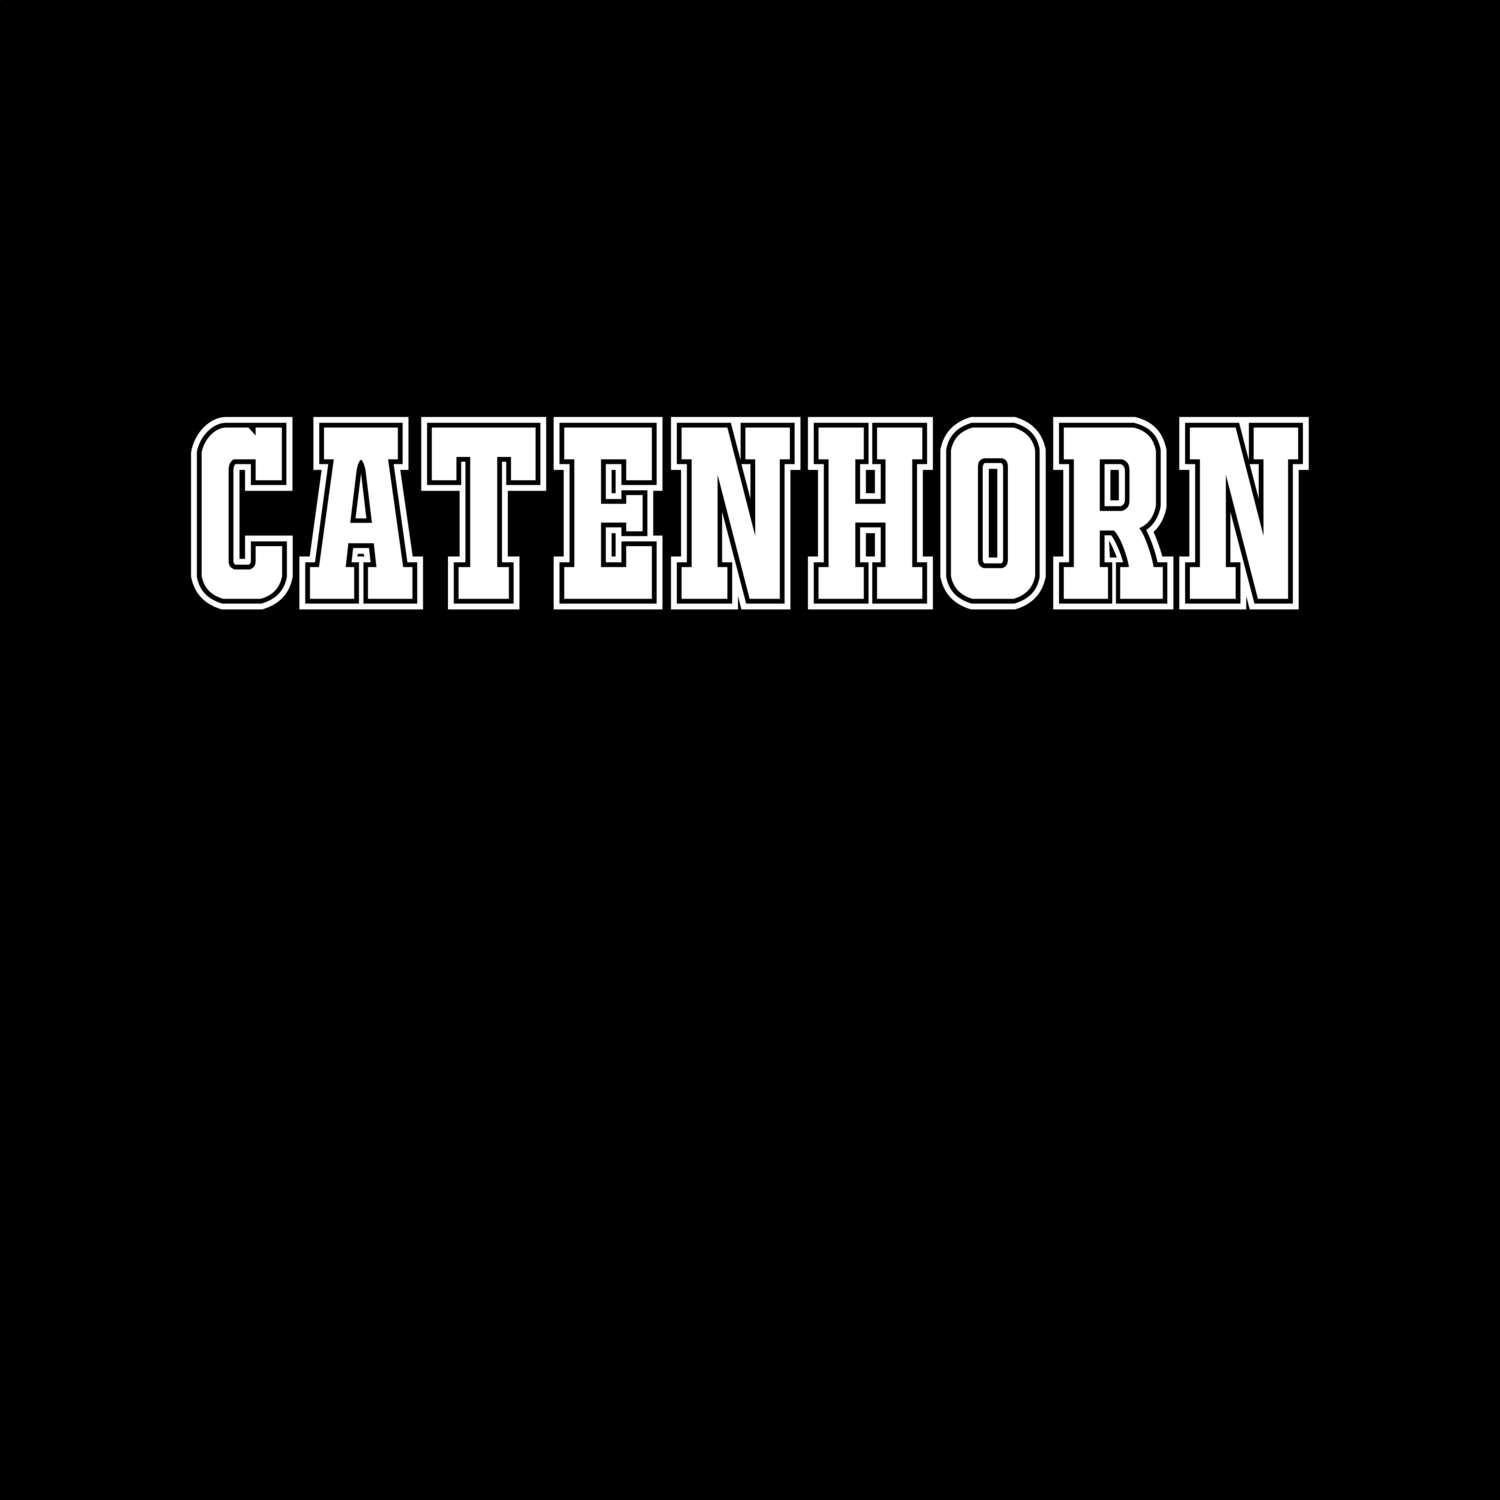 Catenhorn T-Shirt »Classic«